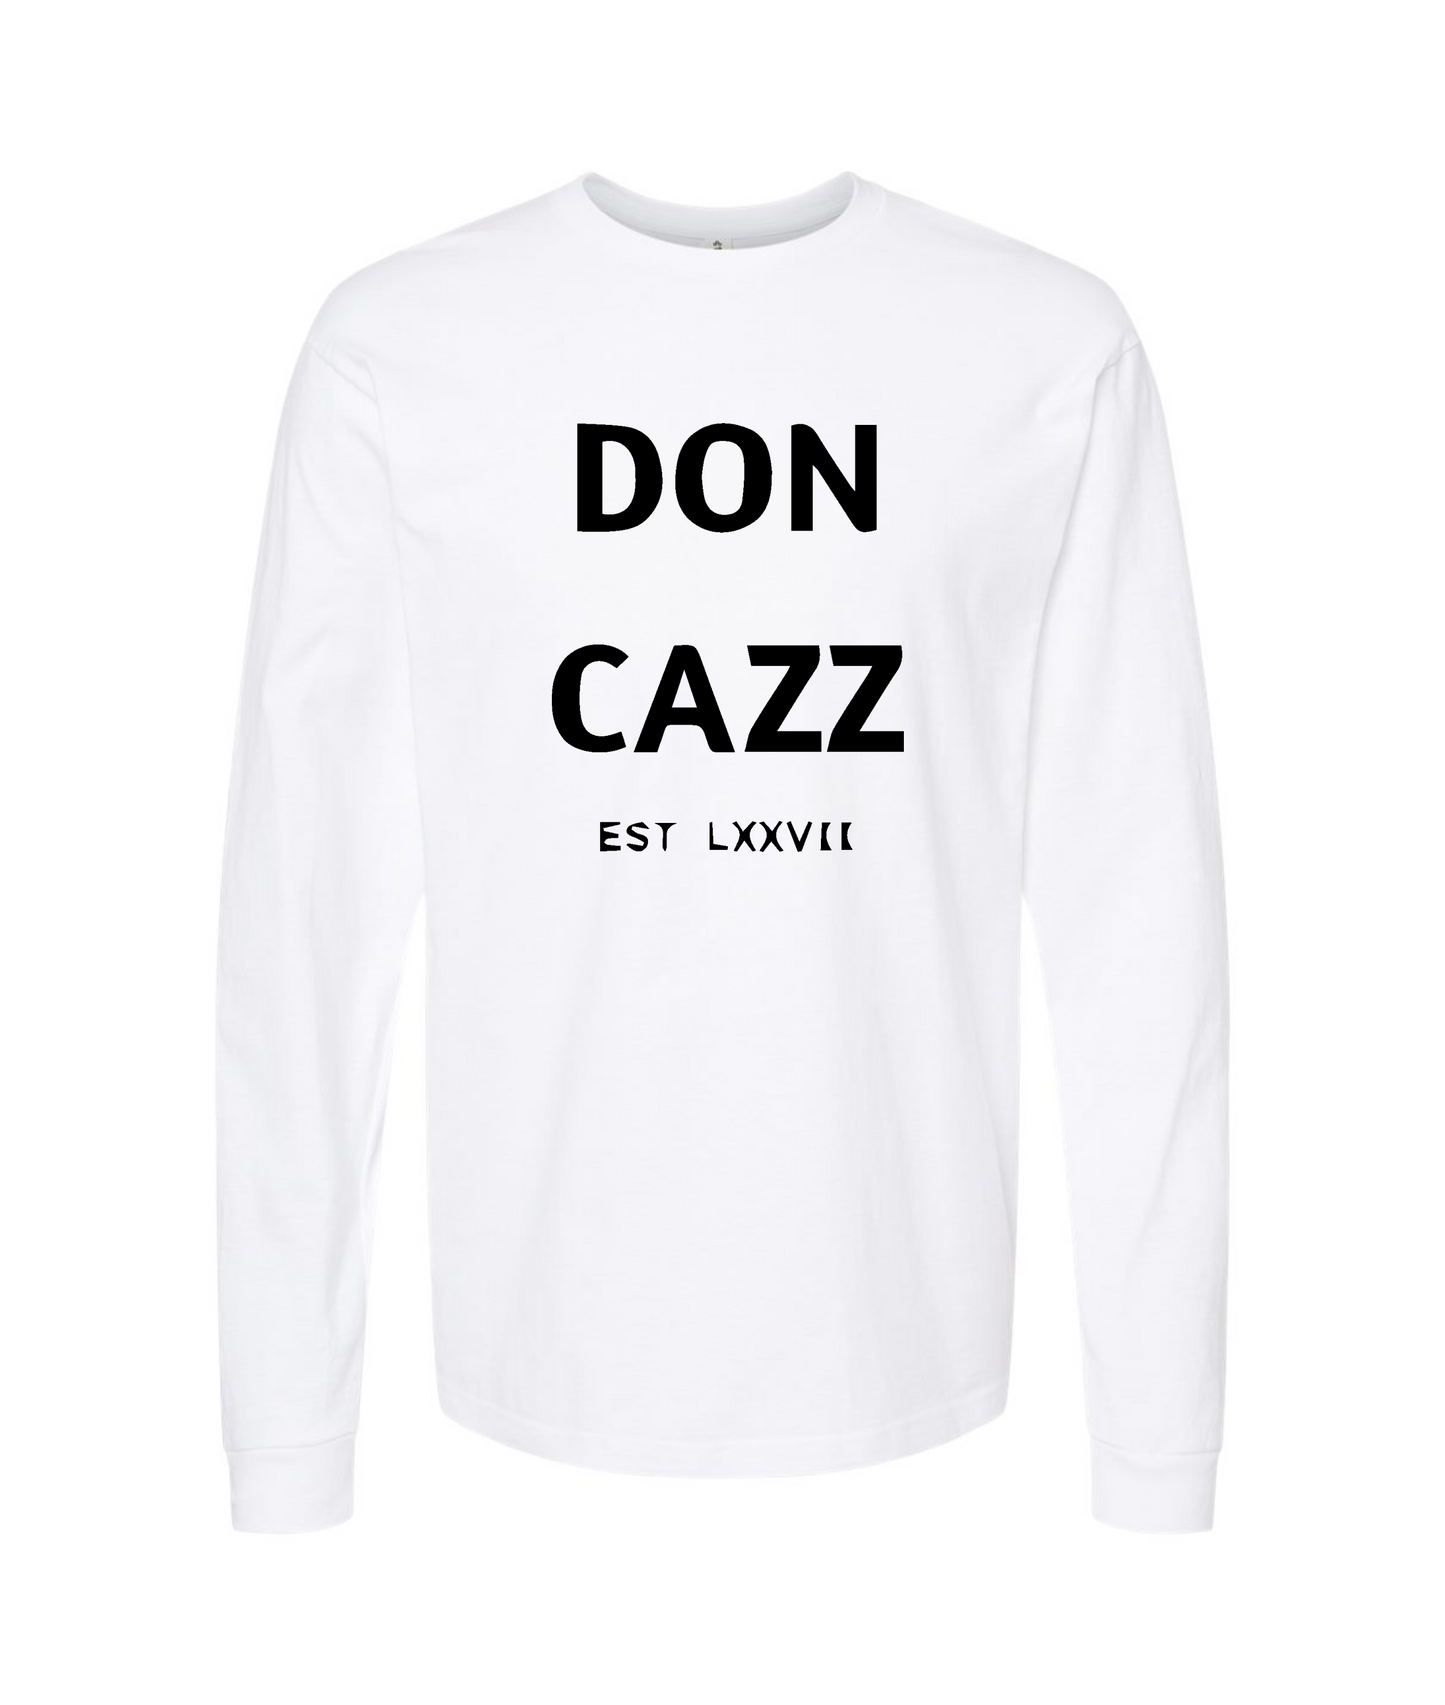 Don Cazz - EST LXXVII - White Long Sleeve T